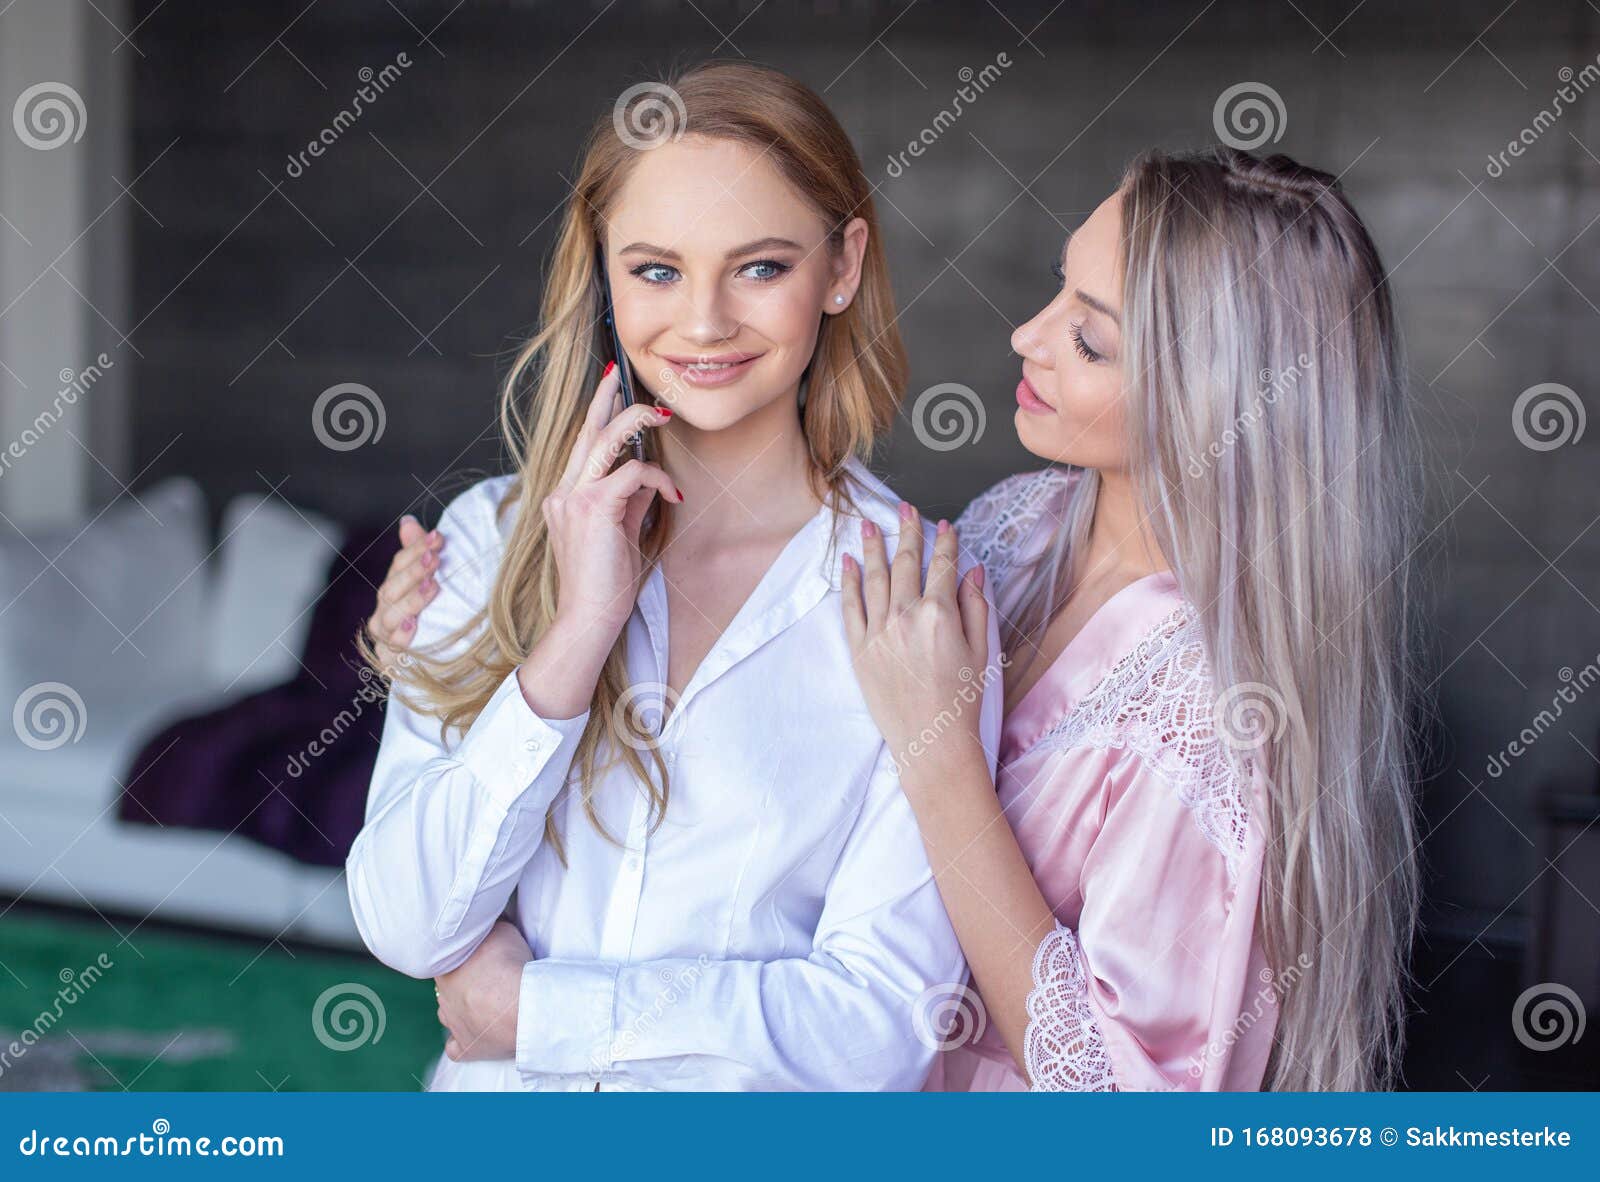 darlene stevens add two lesbians seduce teen photo